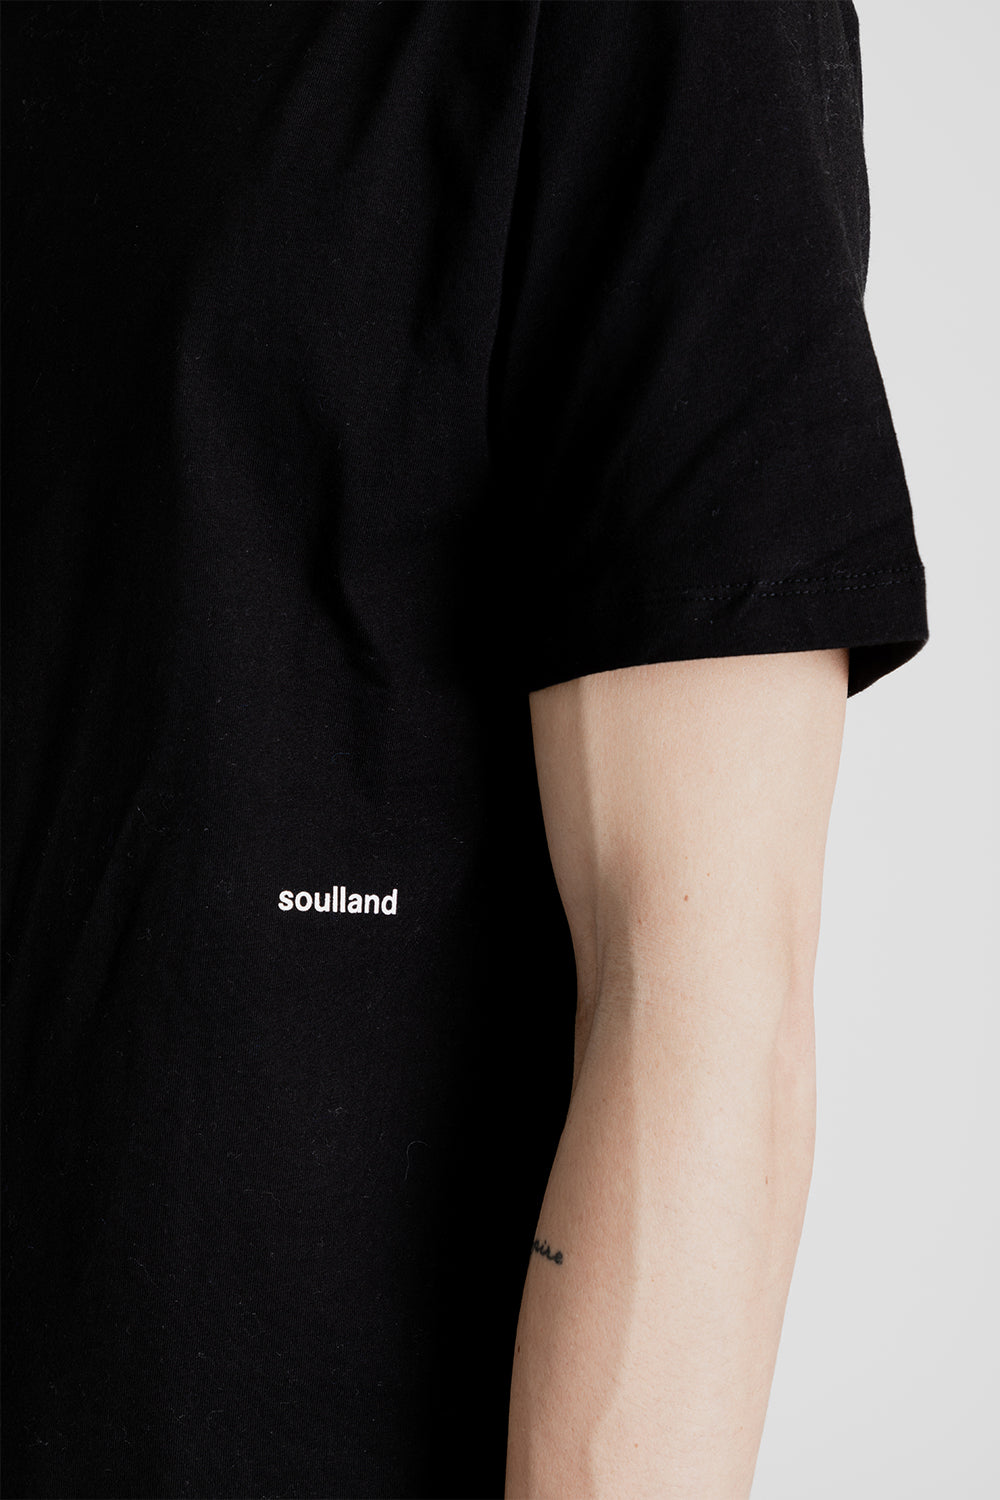 soulland_logic_coffey_tee_shirt_black